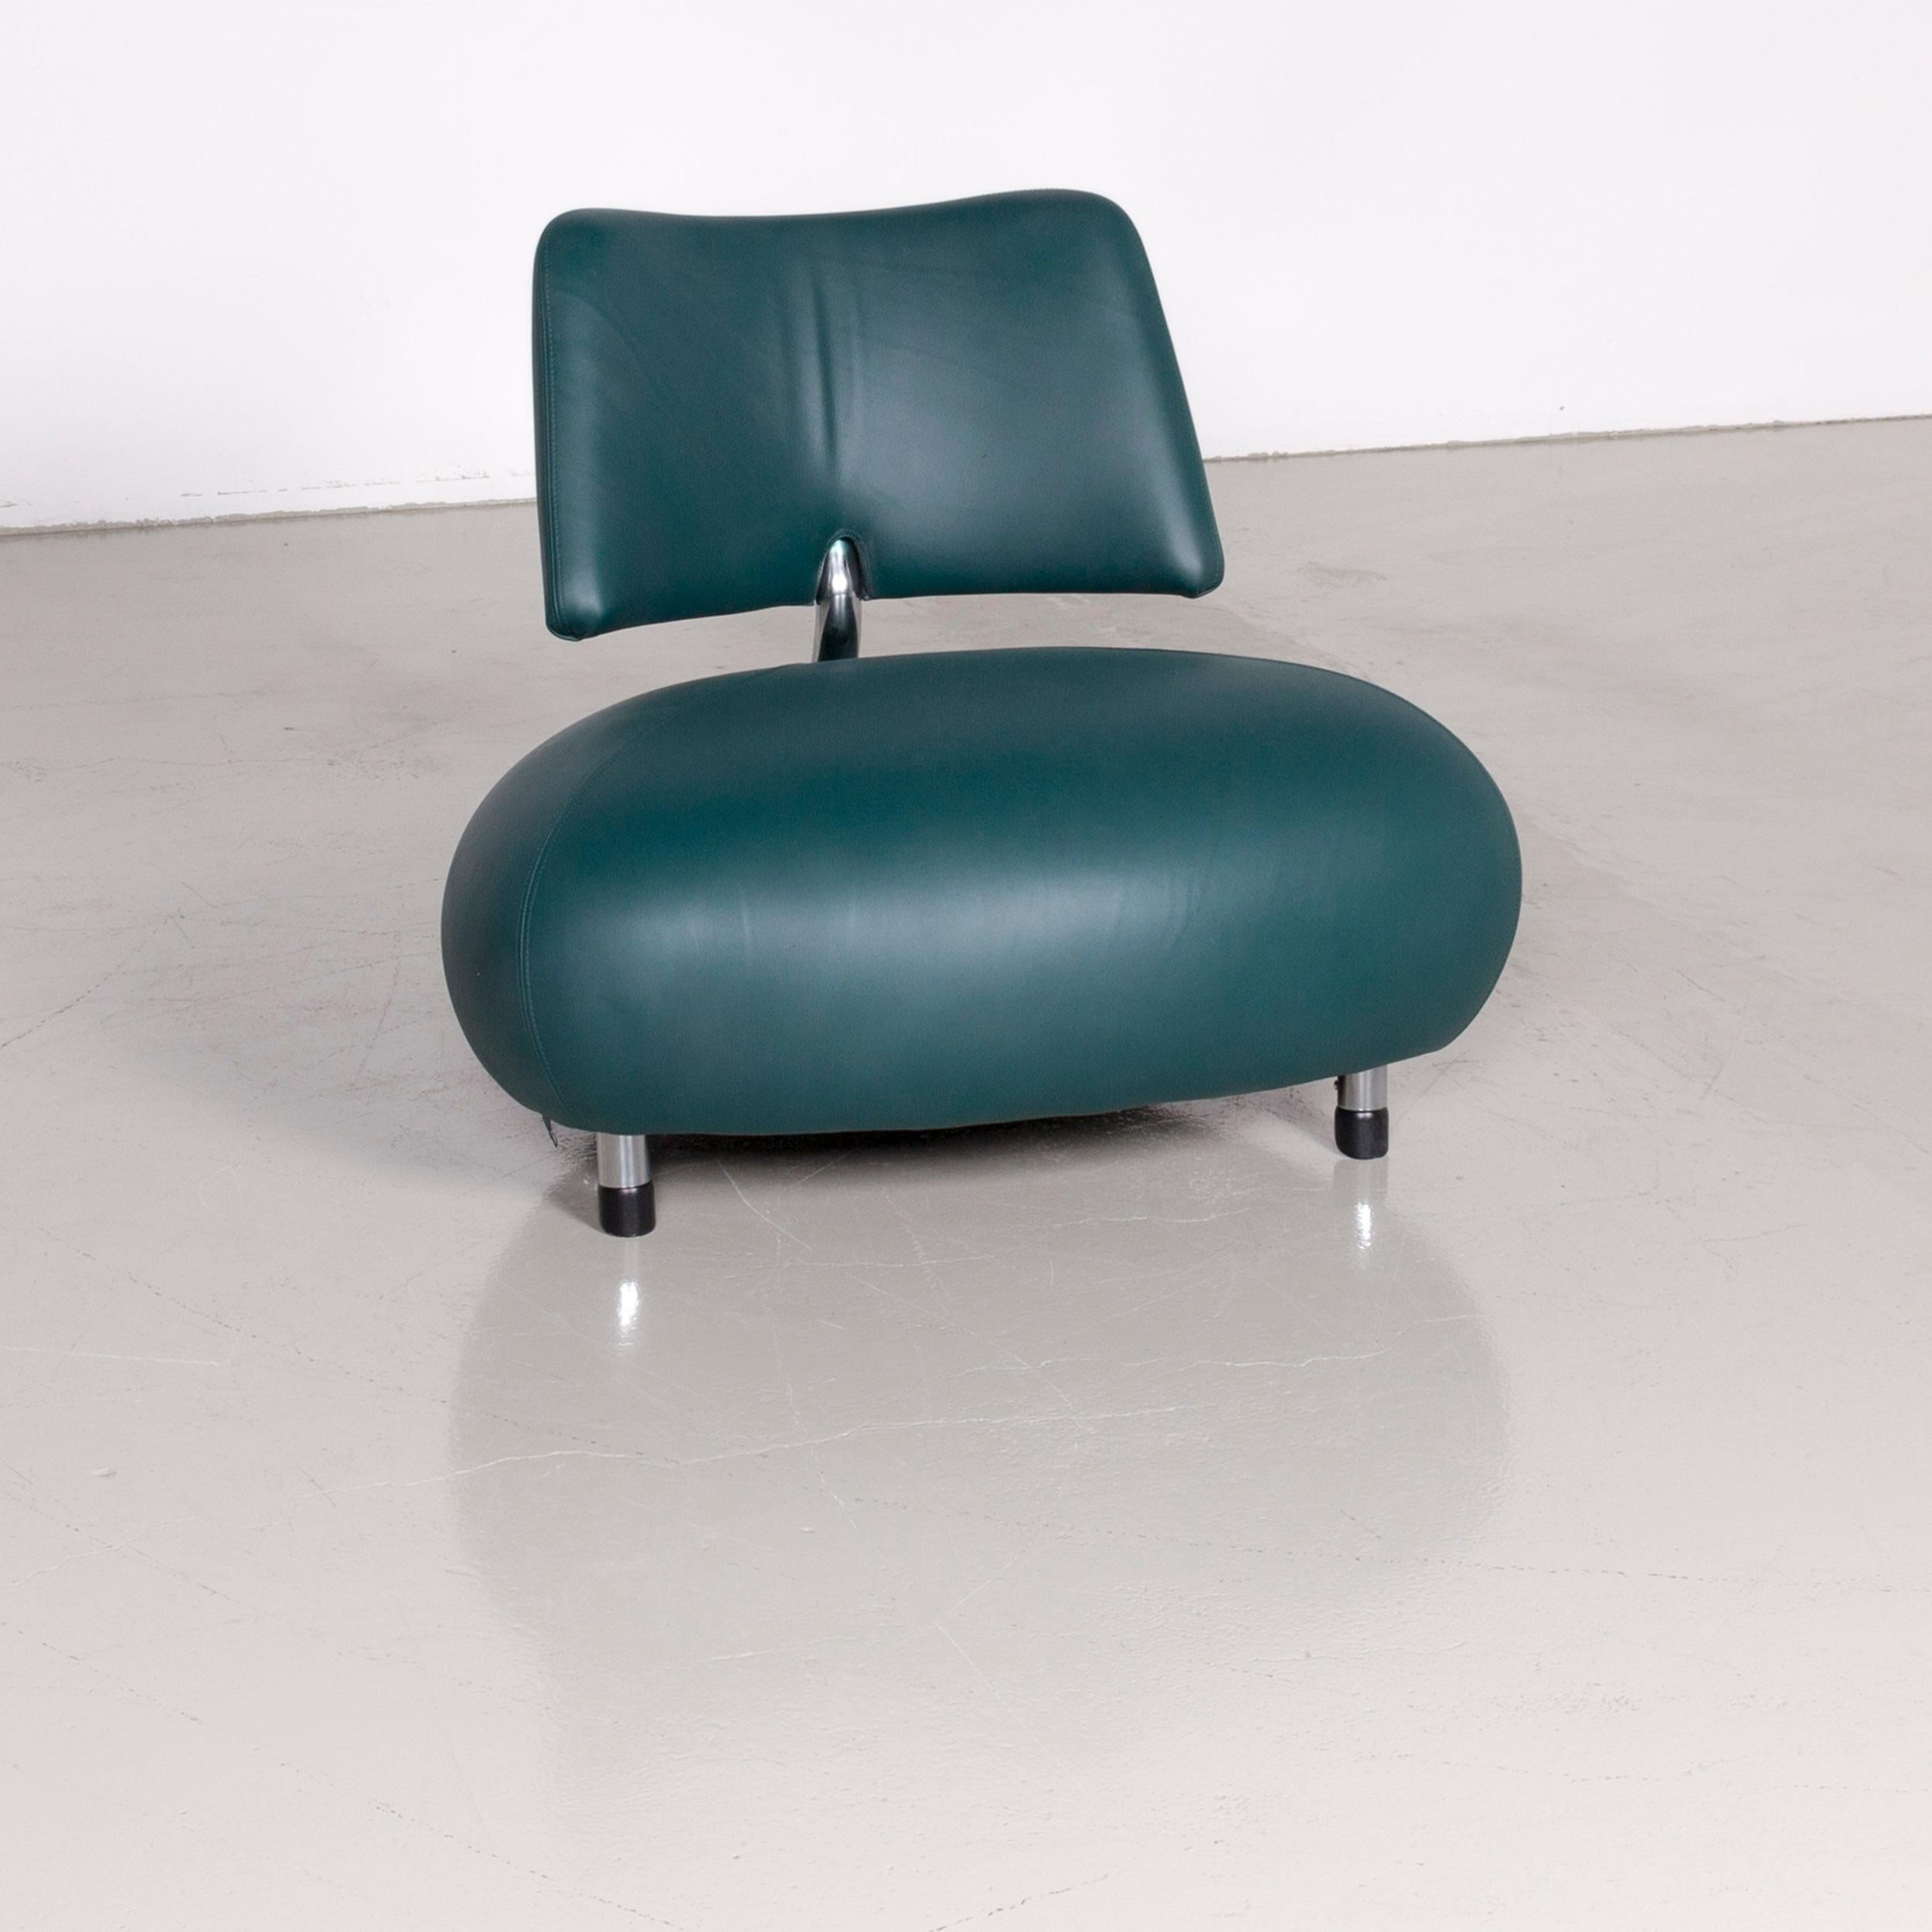 Leolux Pallone Pa designer chair leather green modern.